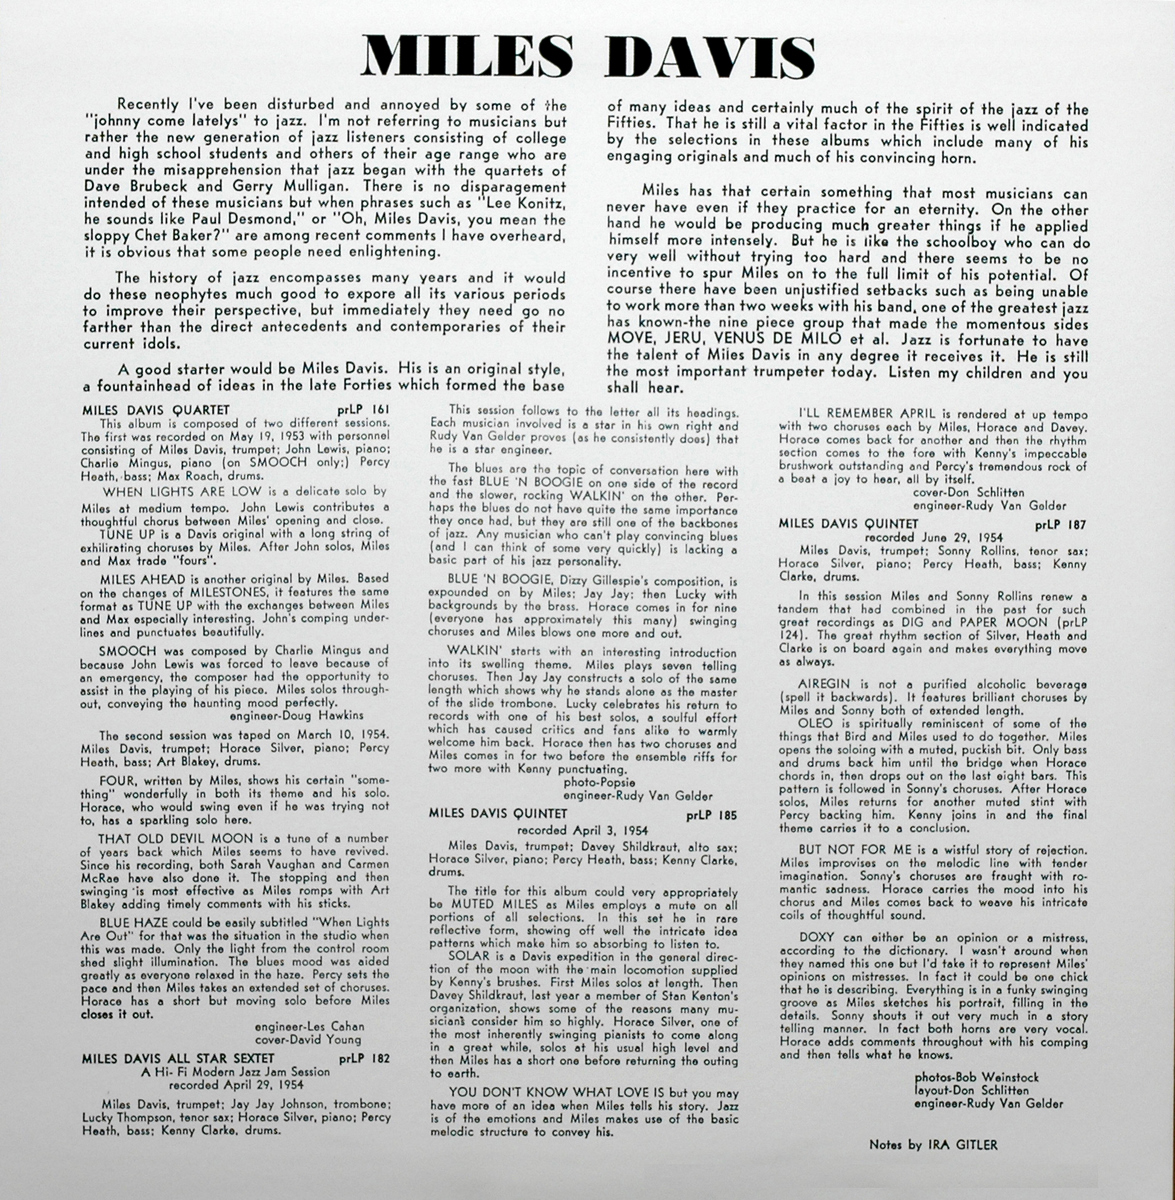 Miles Davis with Sonny Rollins (PRLP 187)